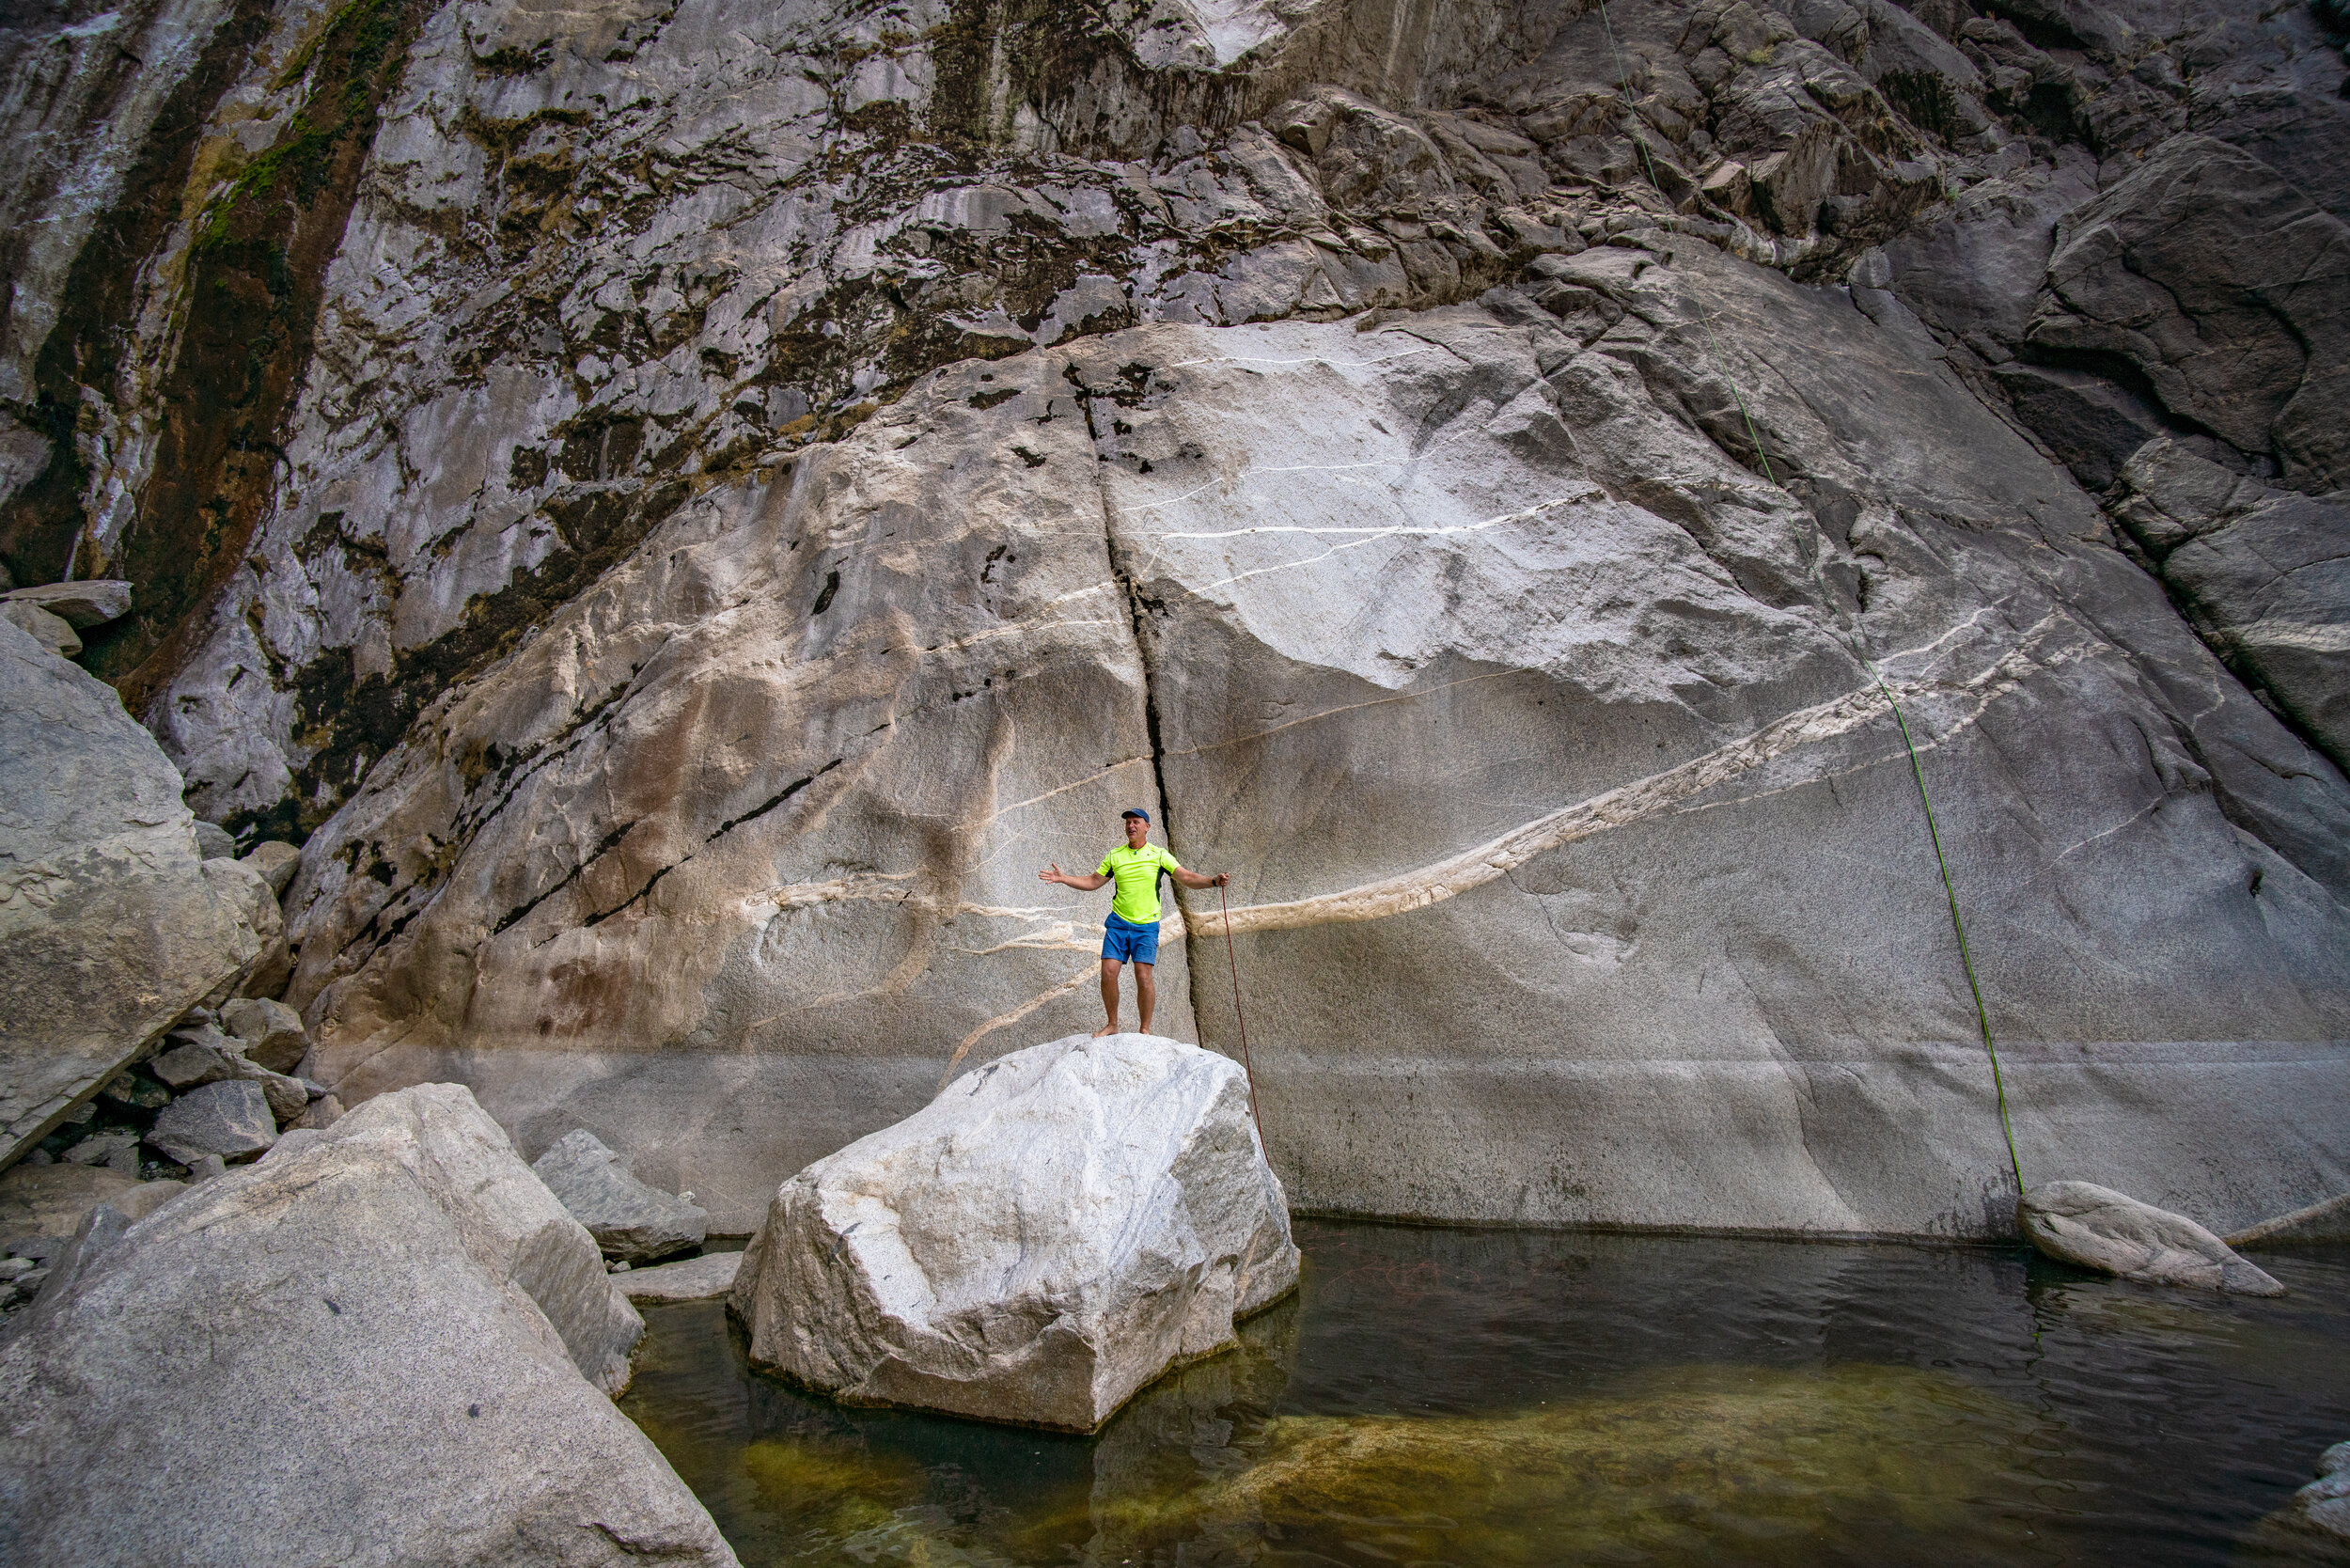  Matt at the base of Lower Yosemite Falls. 